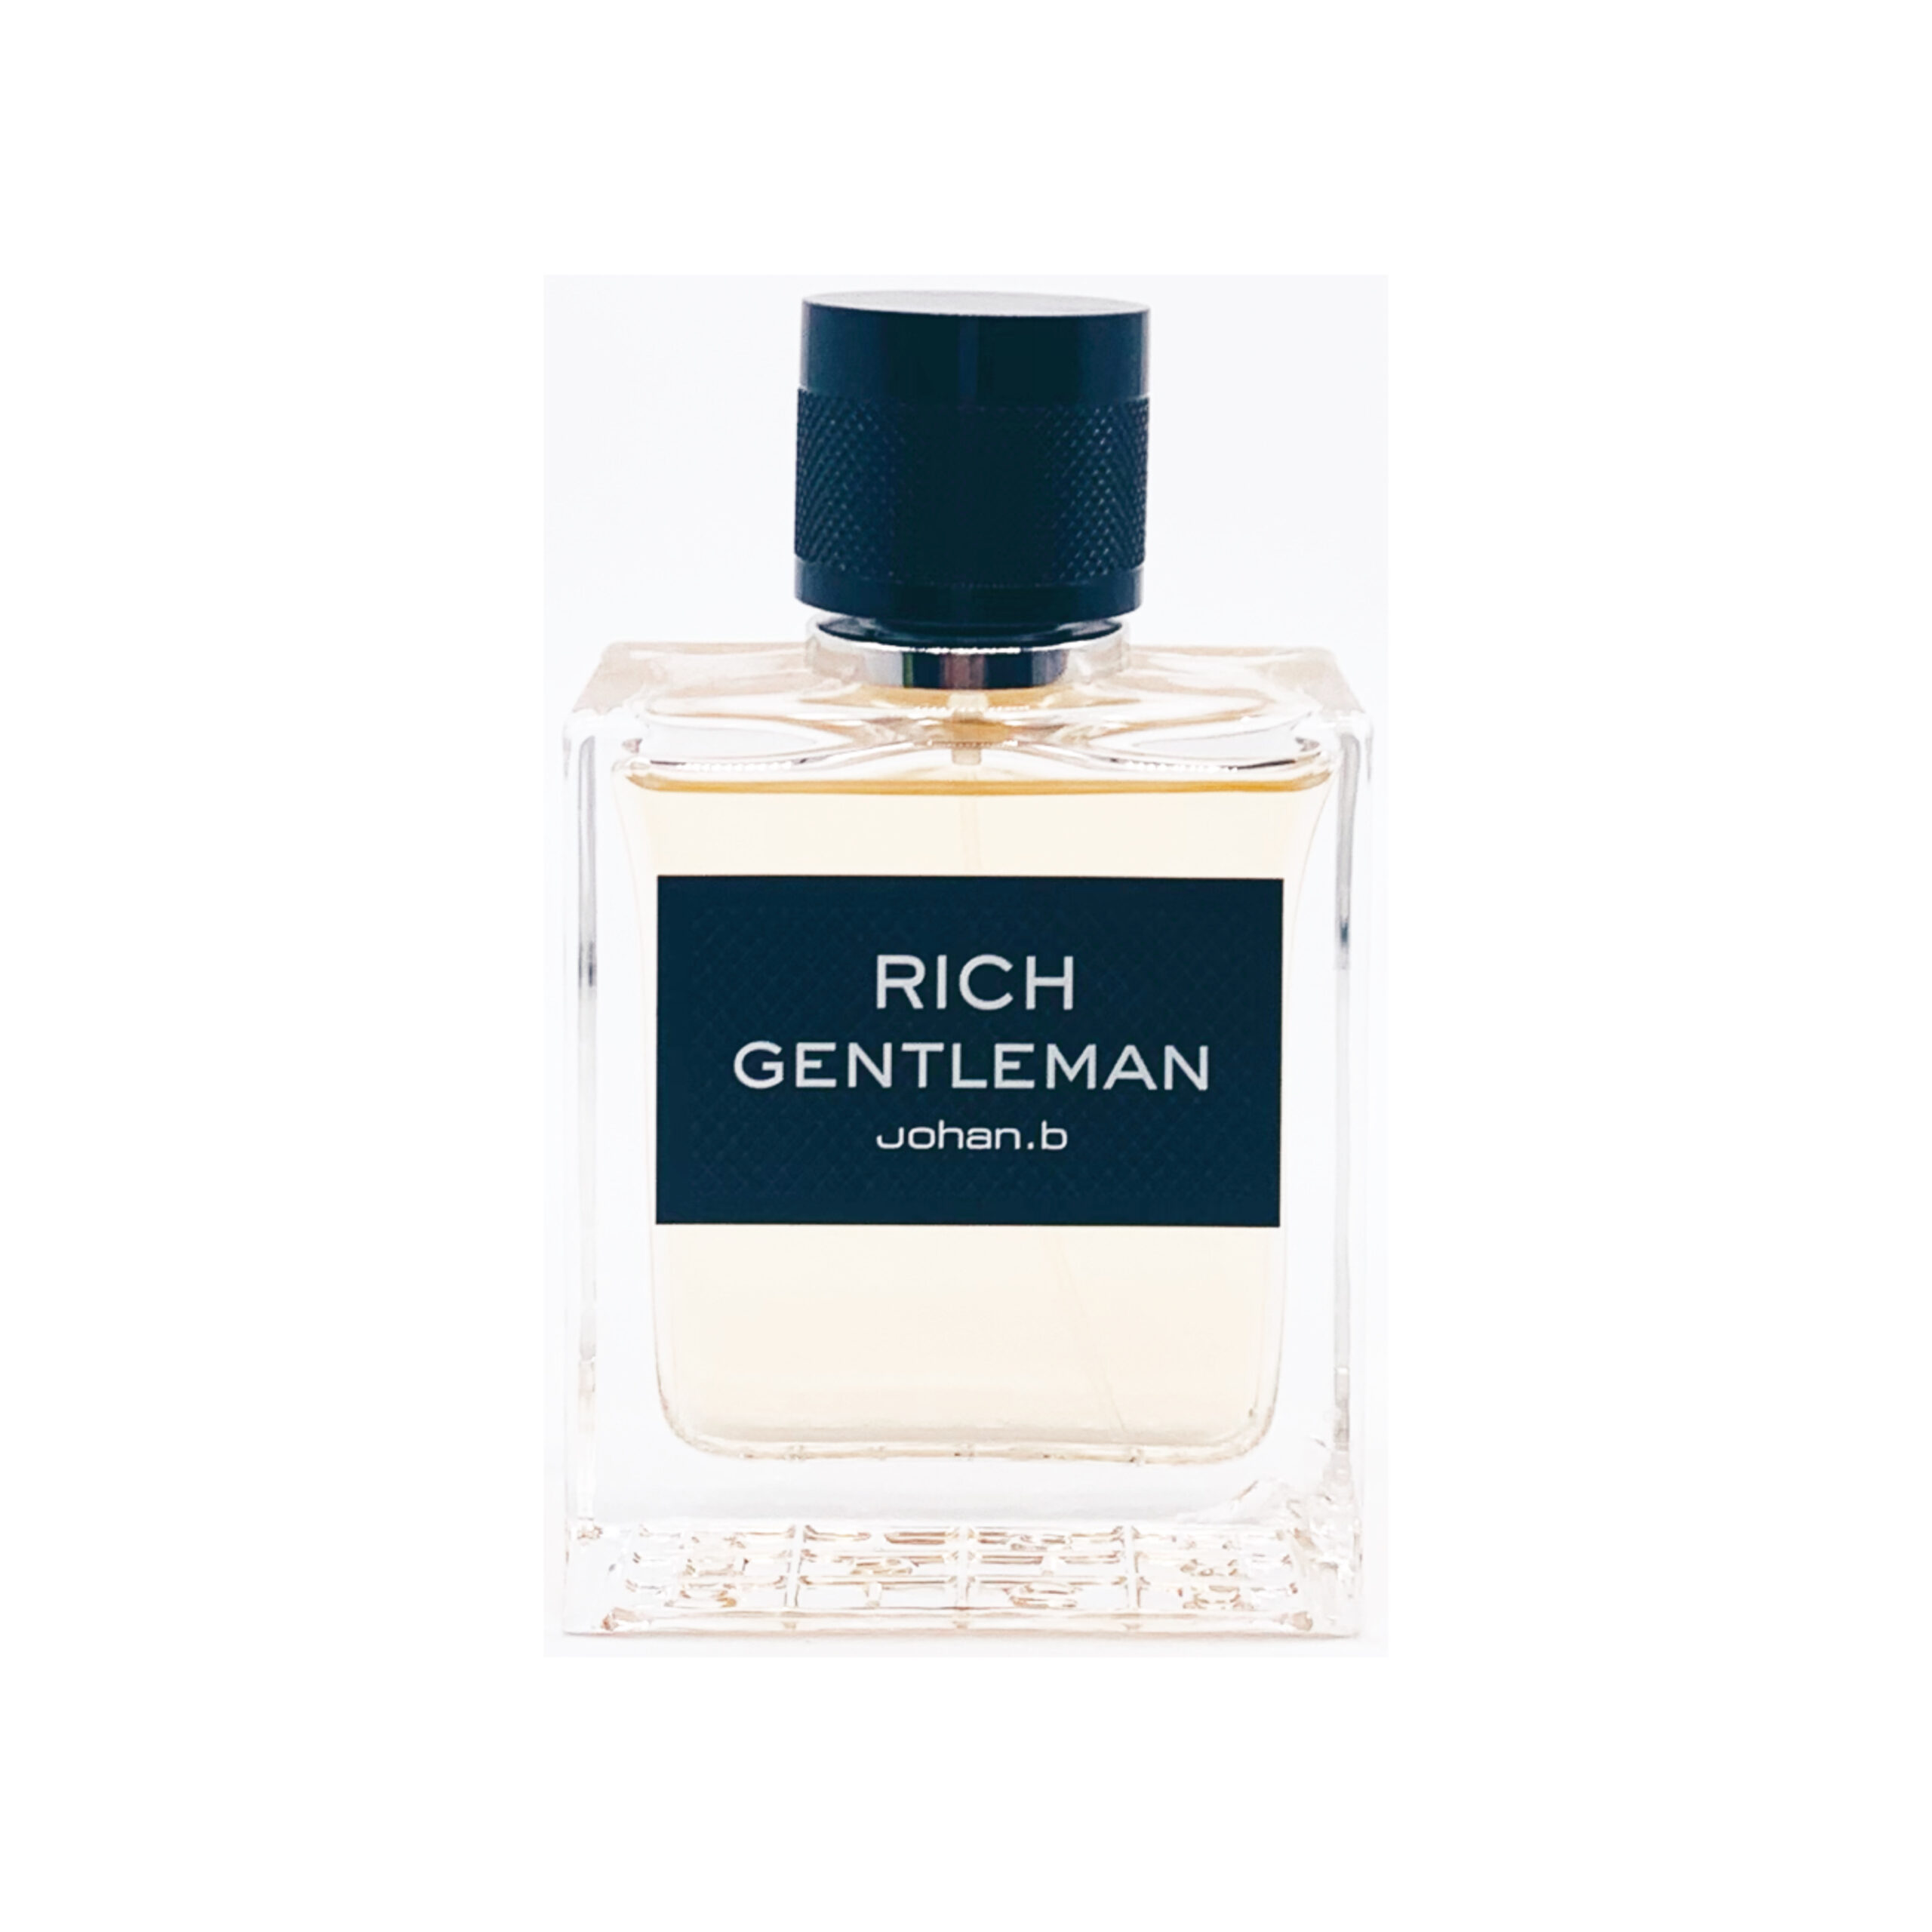 Rich Gentleman by Johan.b (Unboxed 